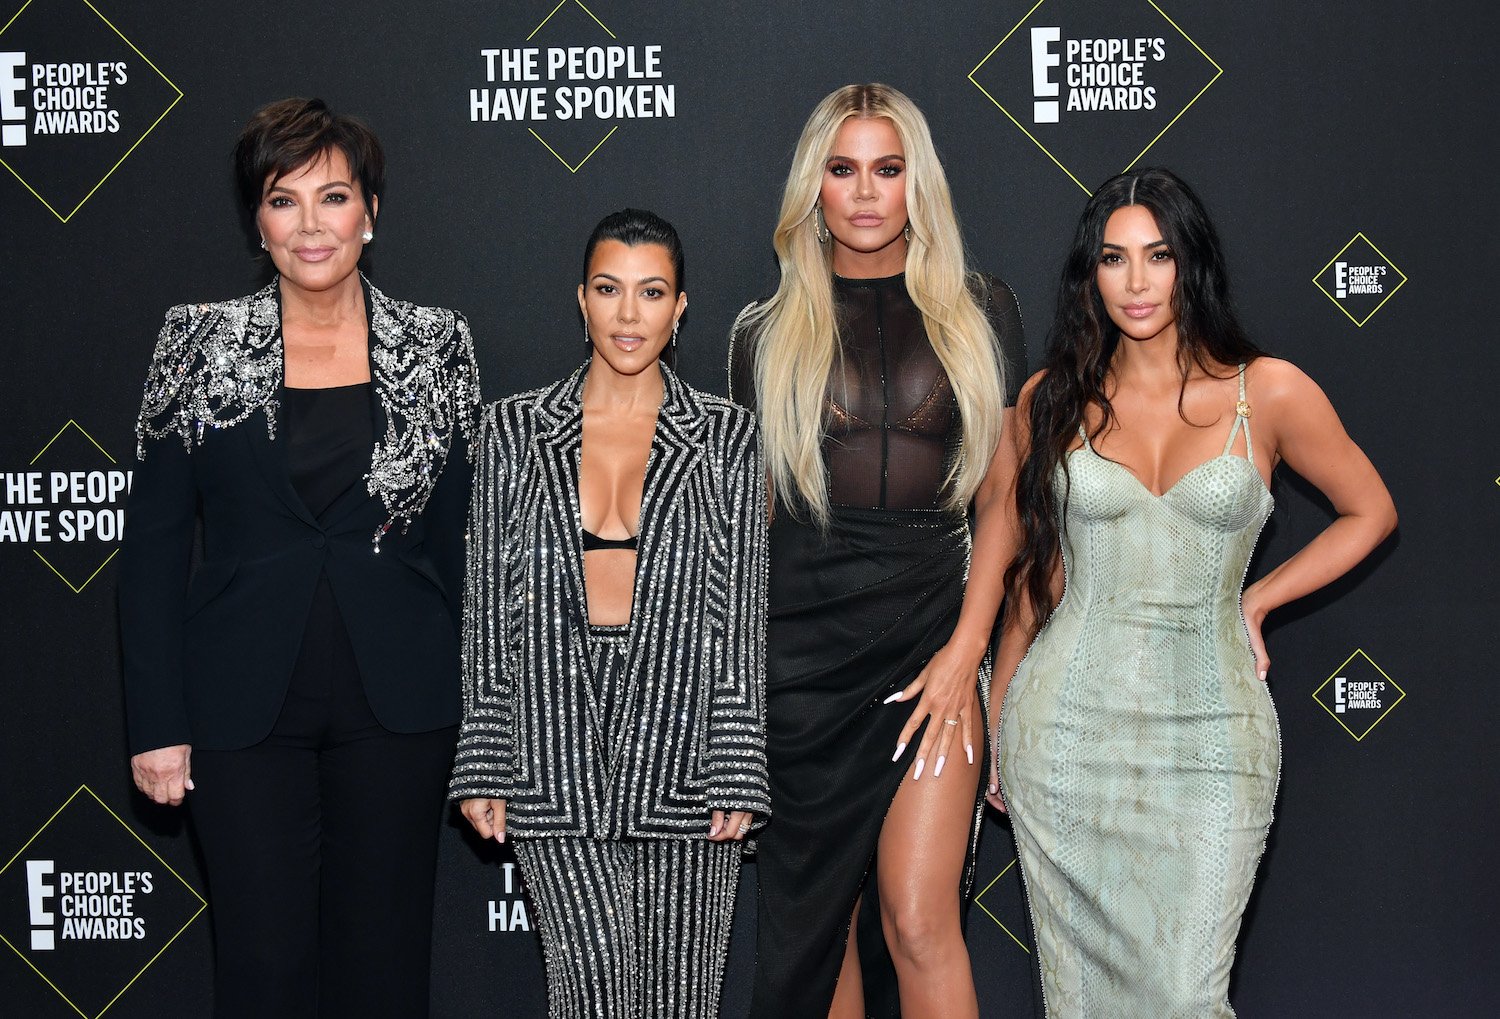 Kris Jenner, Kourtney Kardashian, Khloe Kardashian, and Kim Kardashian West arrive to the 2019 E! People's Choice Awards